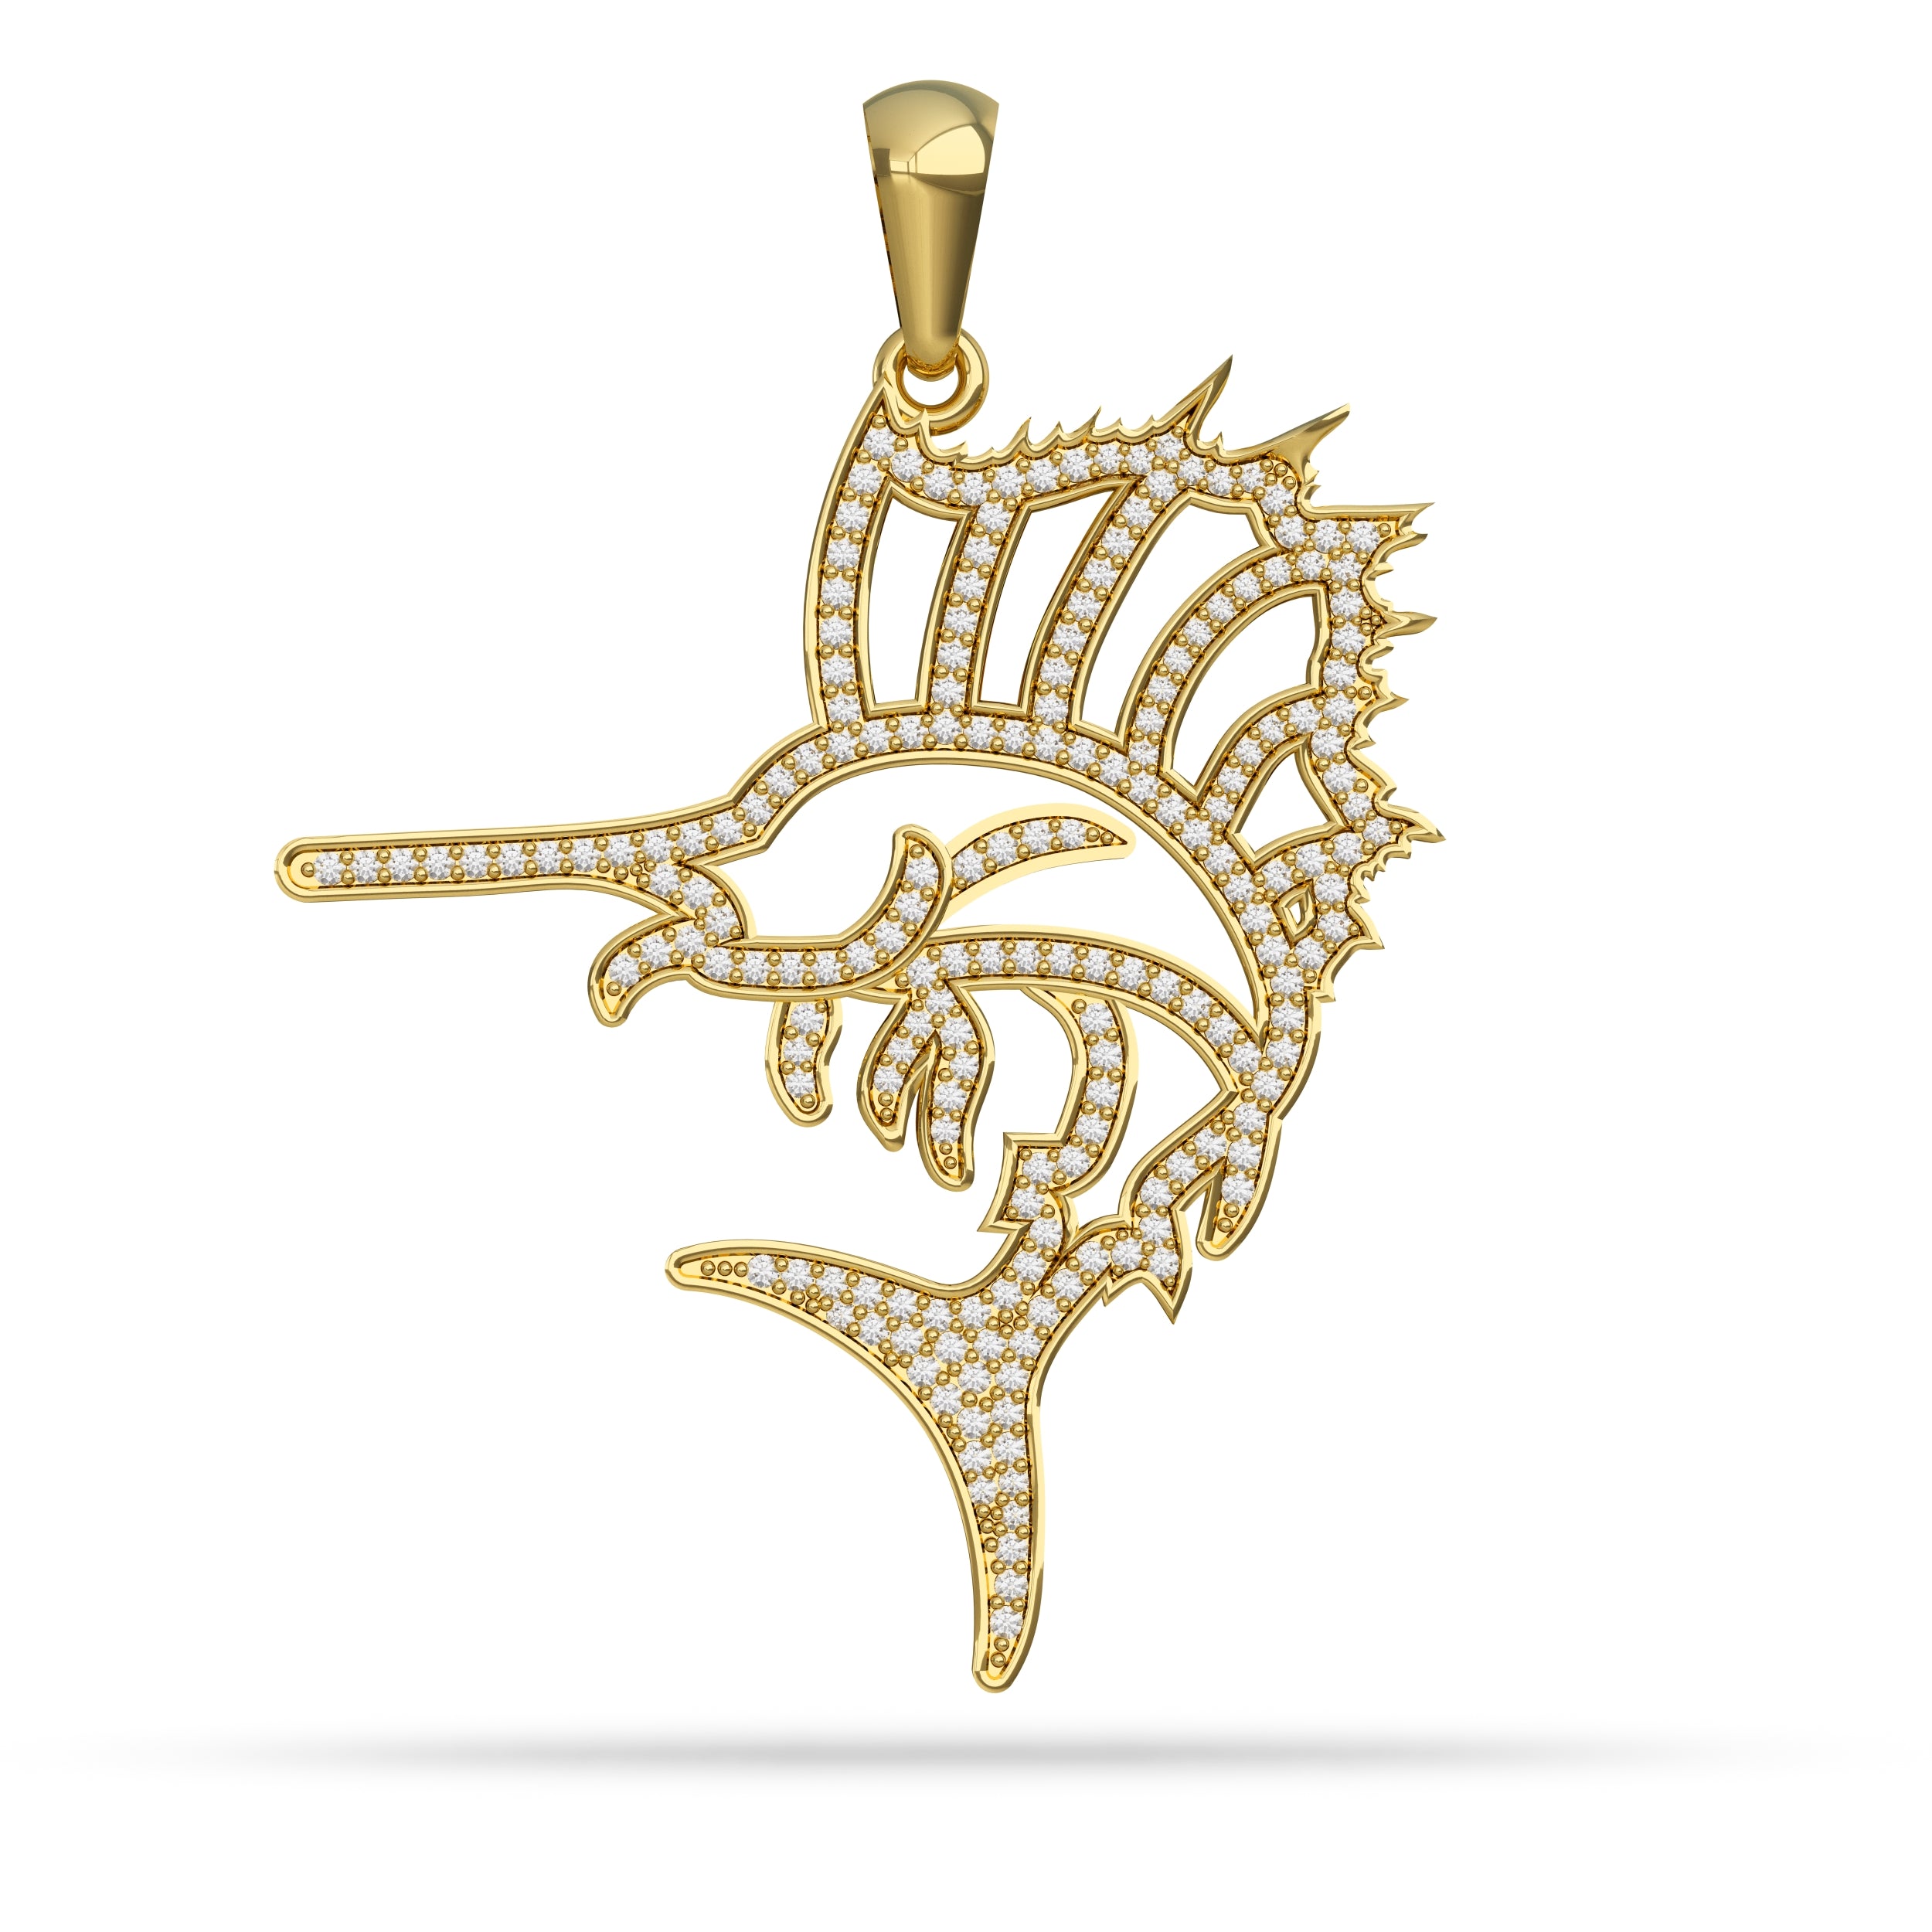 Gold And Diamond Sailfish Pendant Silhouette By Nautical Treasure Jewelry 